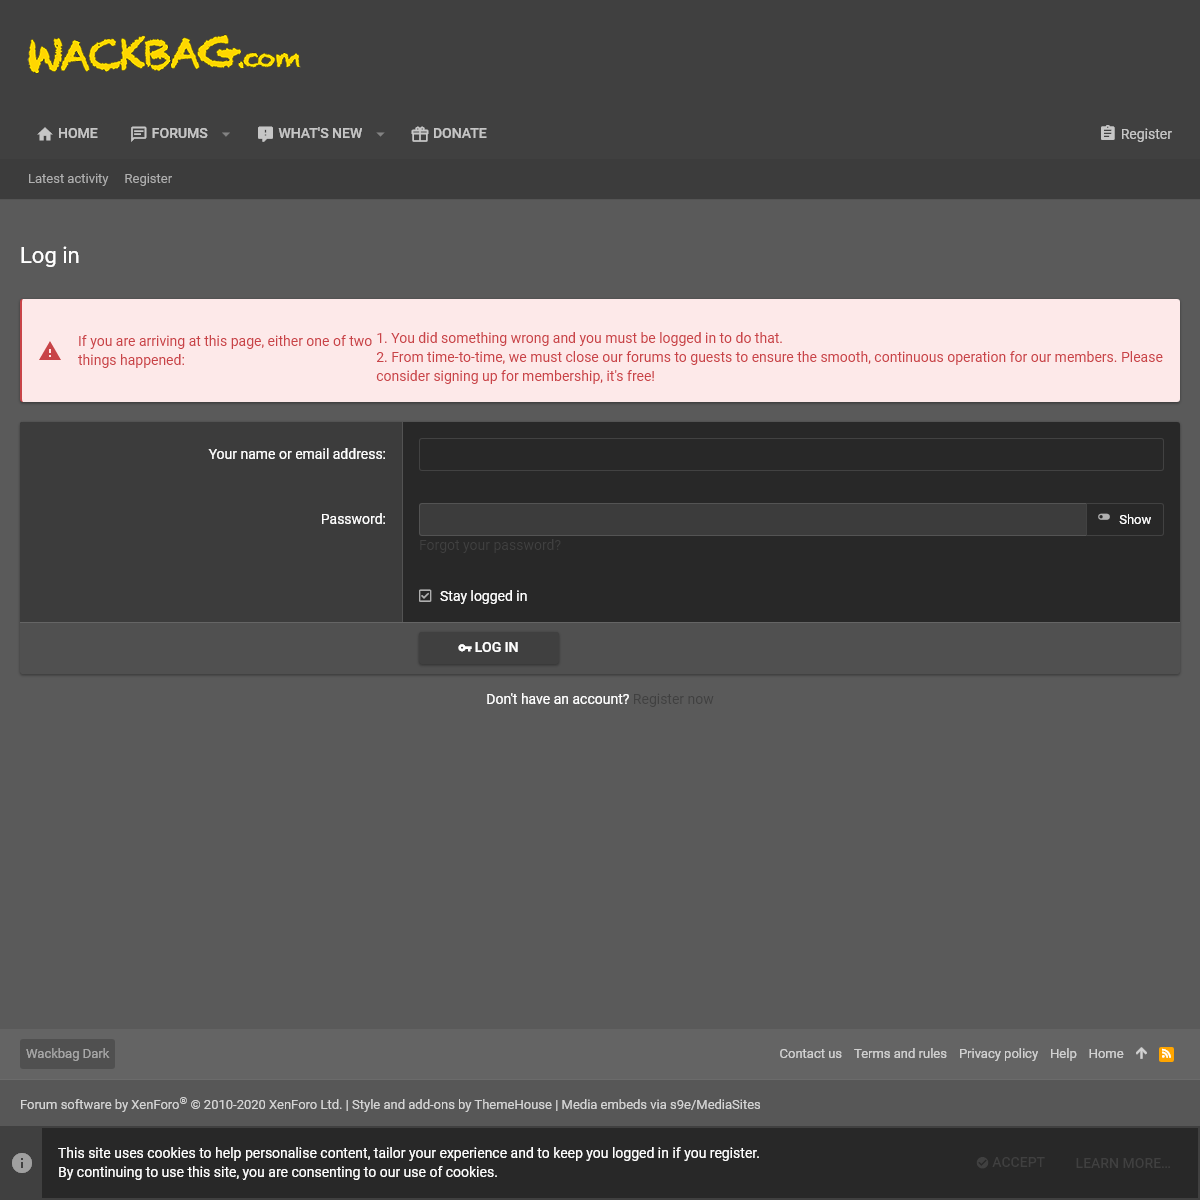 A complete backup of wackbag.com